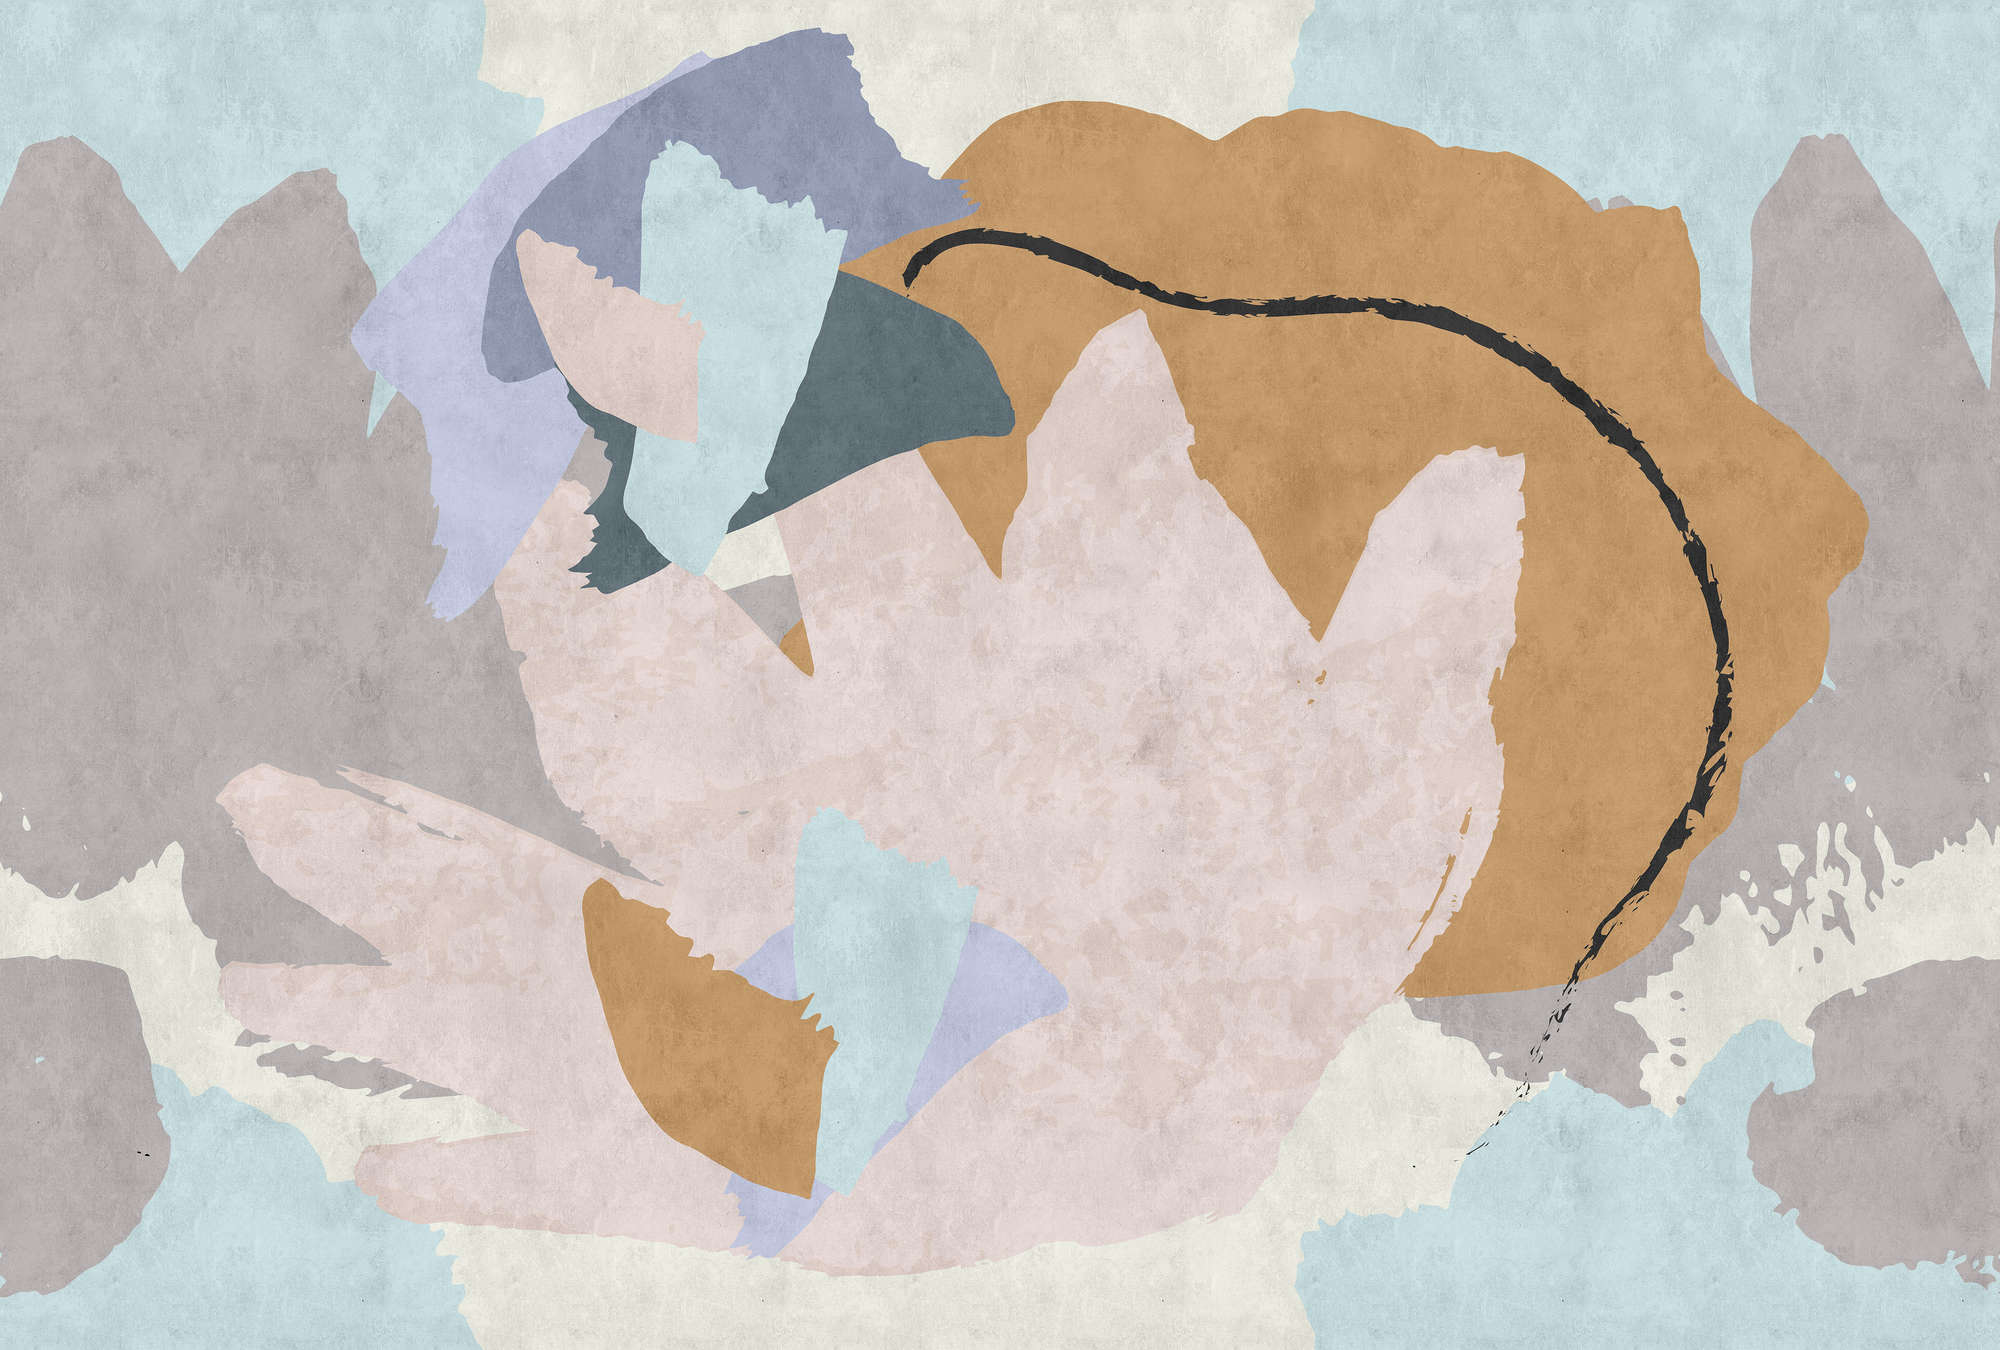             Floral Collage 2 - Modern Wallpaper Abstract Art in Blotting Paper Texture - Blue, Cream | Matt Smooth Non-woven
        